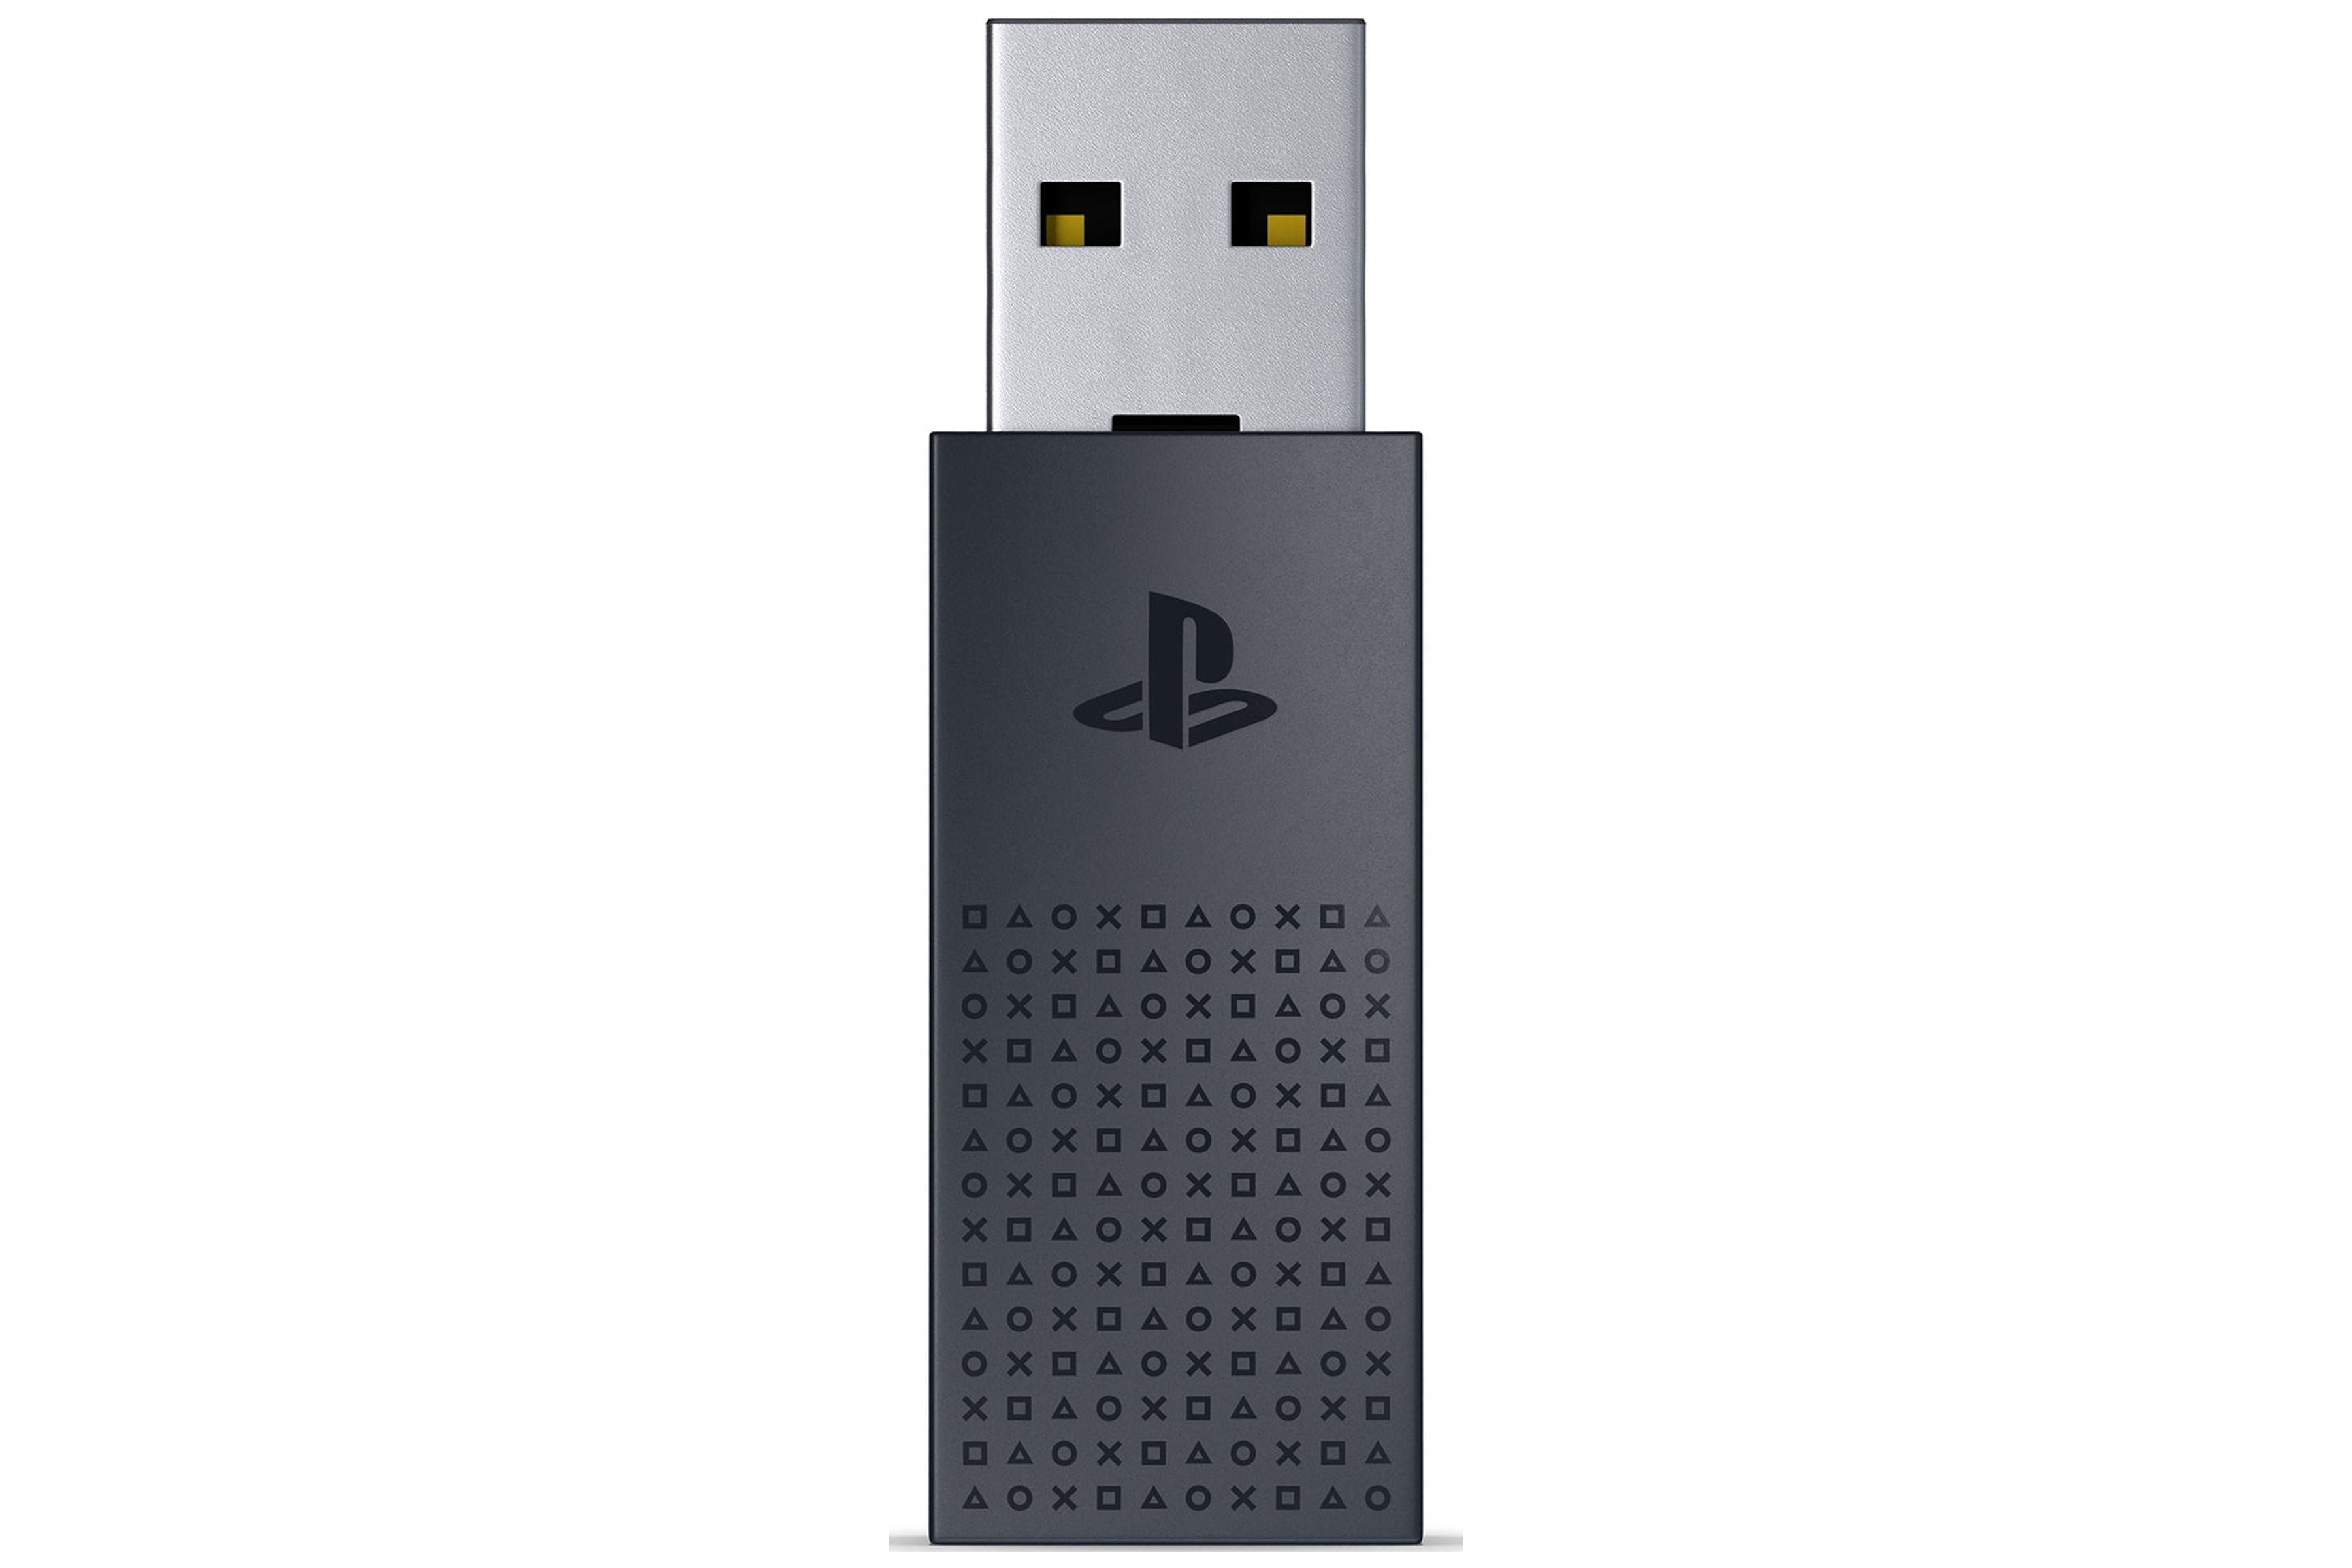 PlayStation Link USB Adapter 